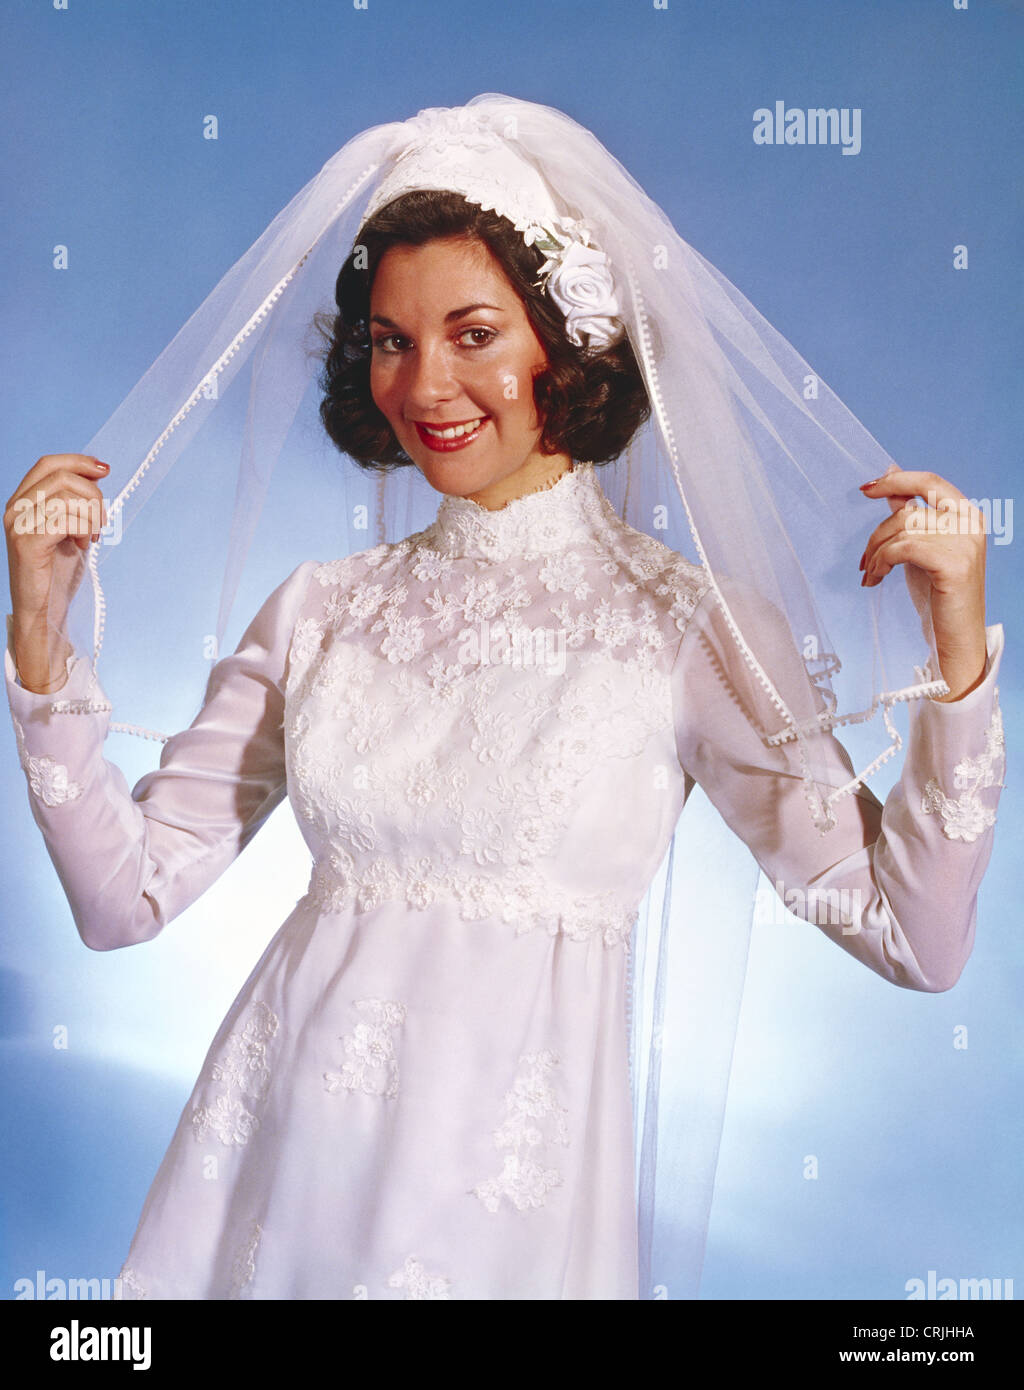 Vintage portrait of a bride showing her veil Stock Photo